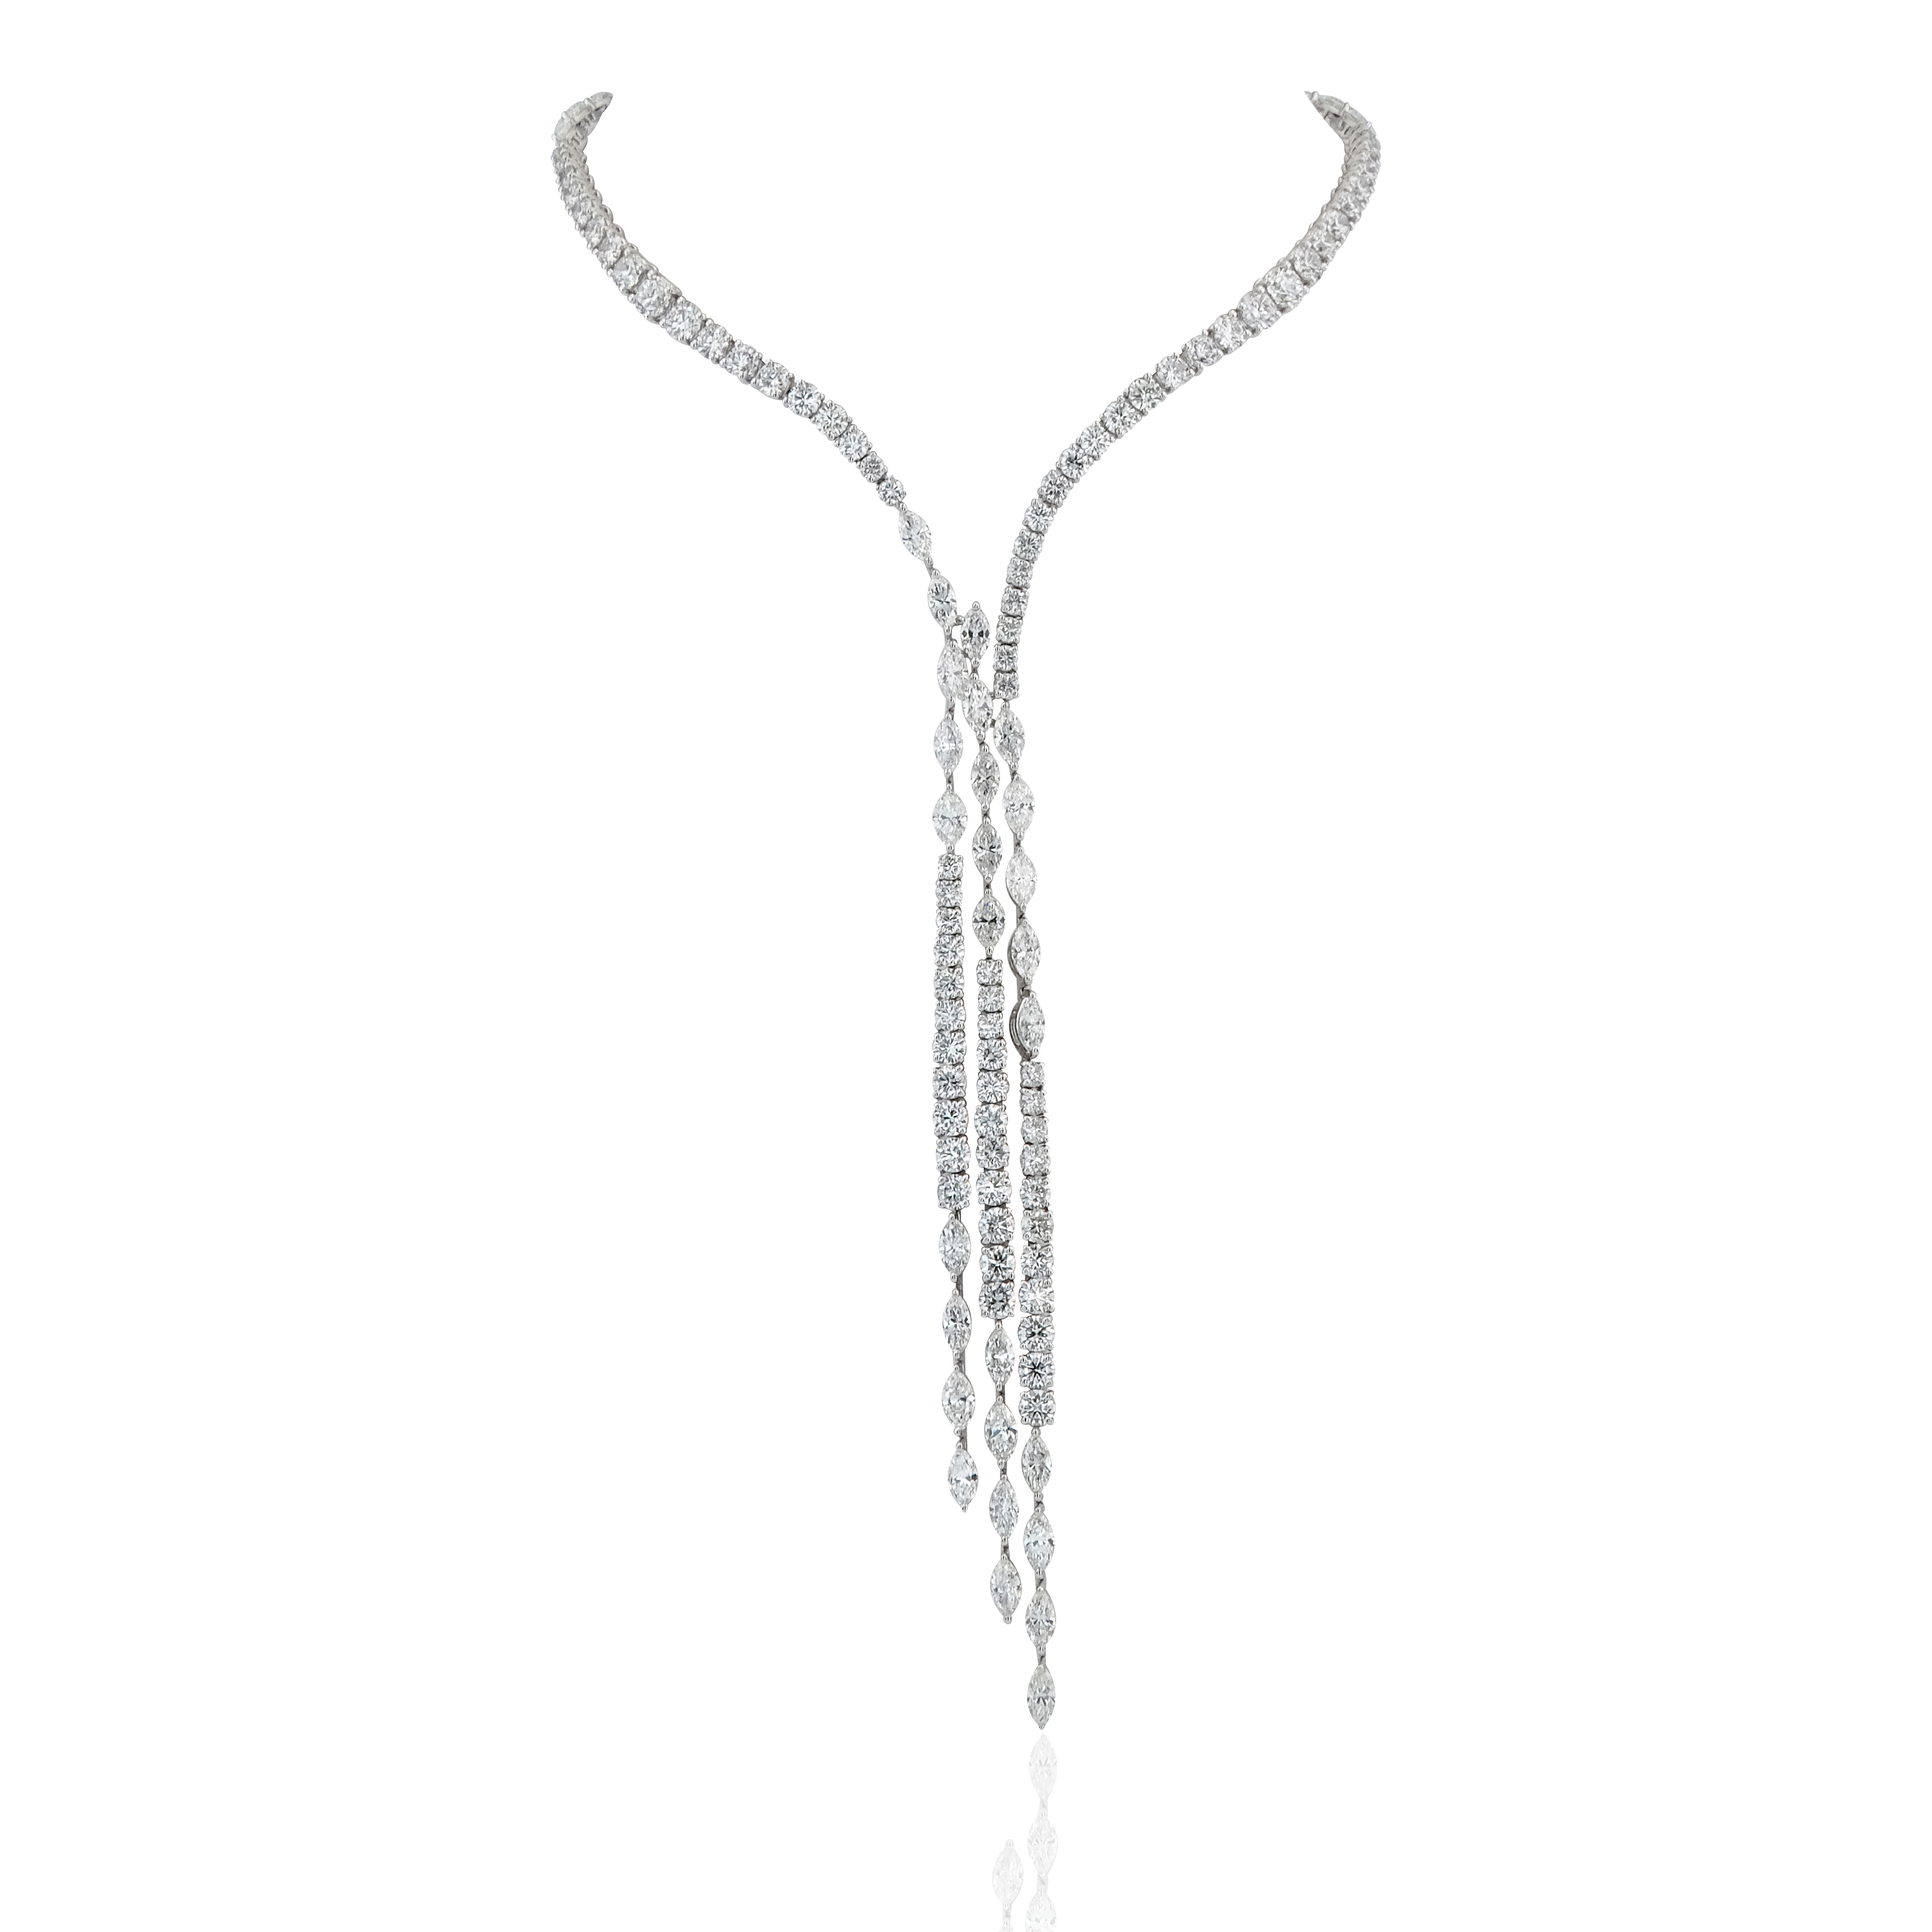 21,80 Ct. Diamond Design Necklace